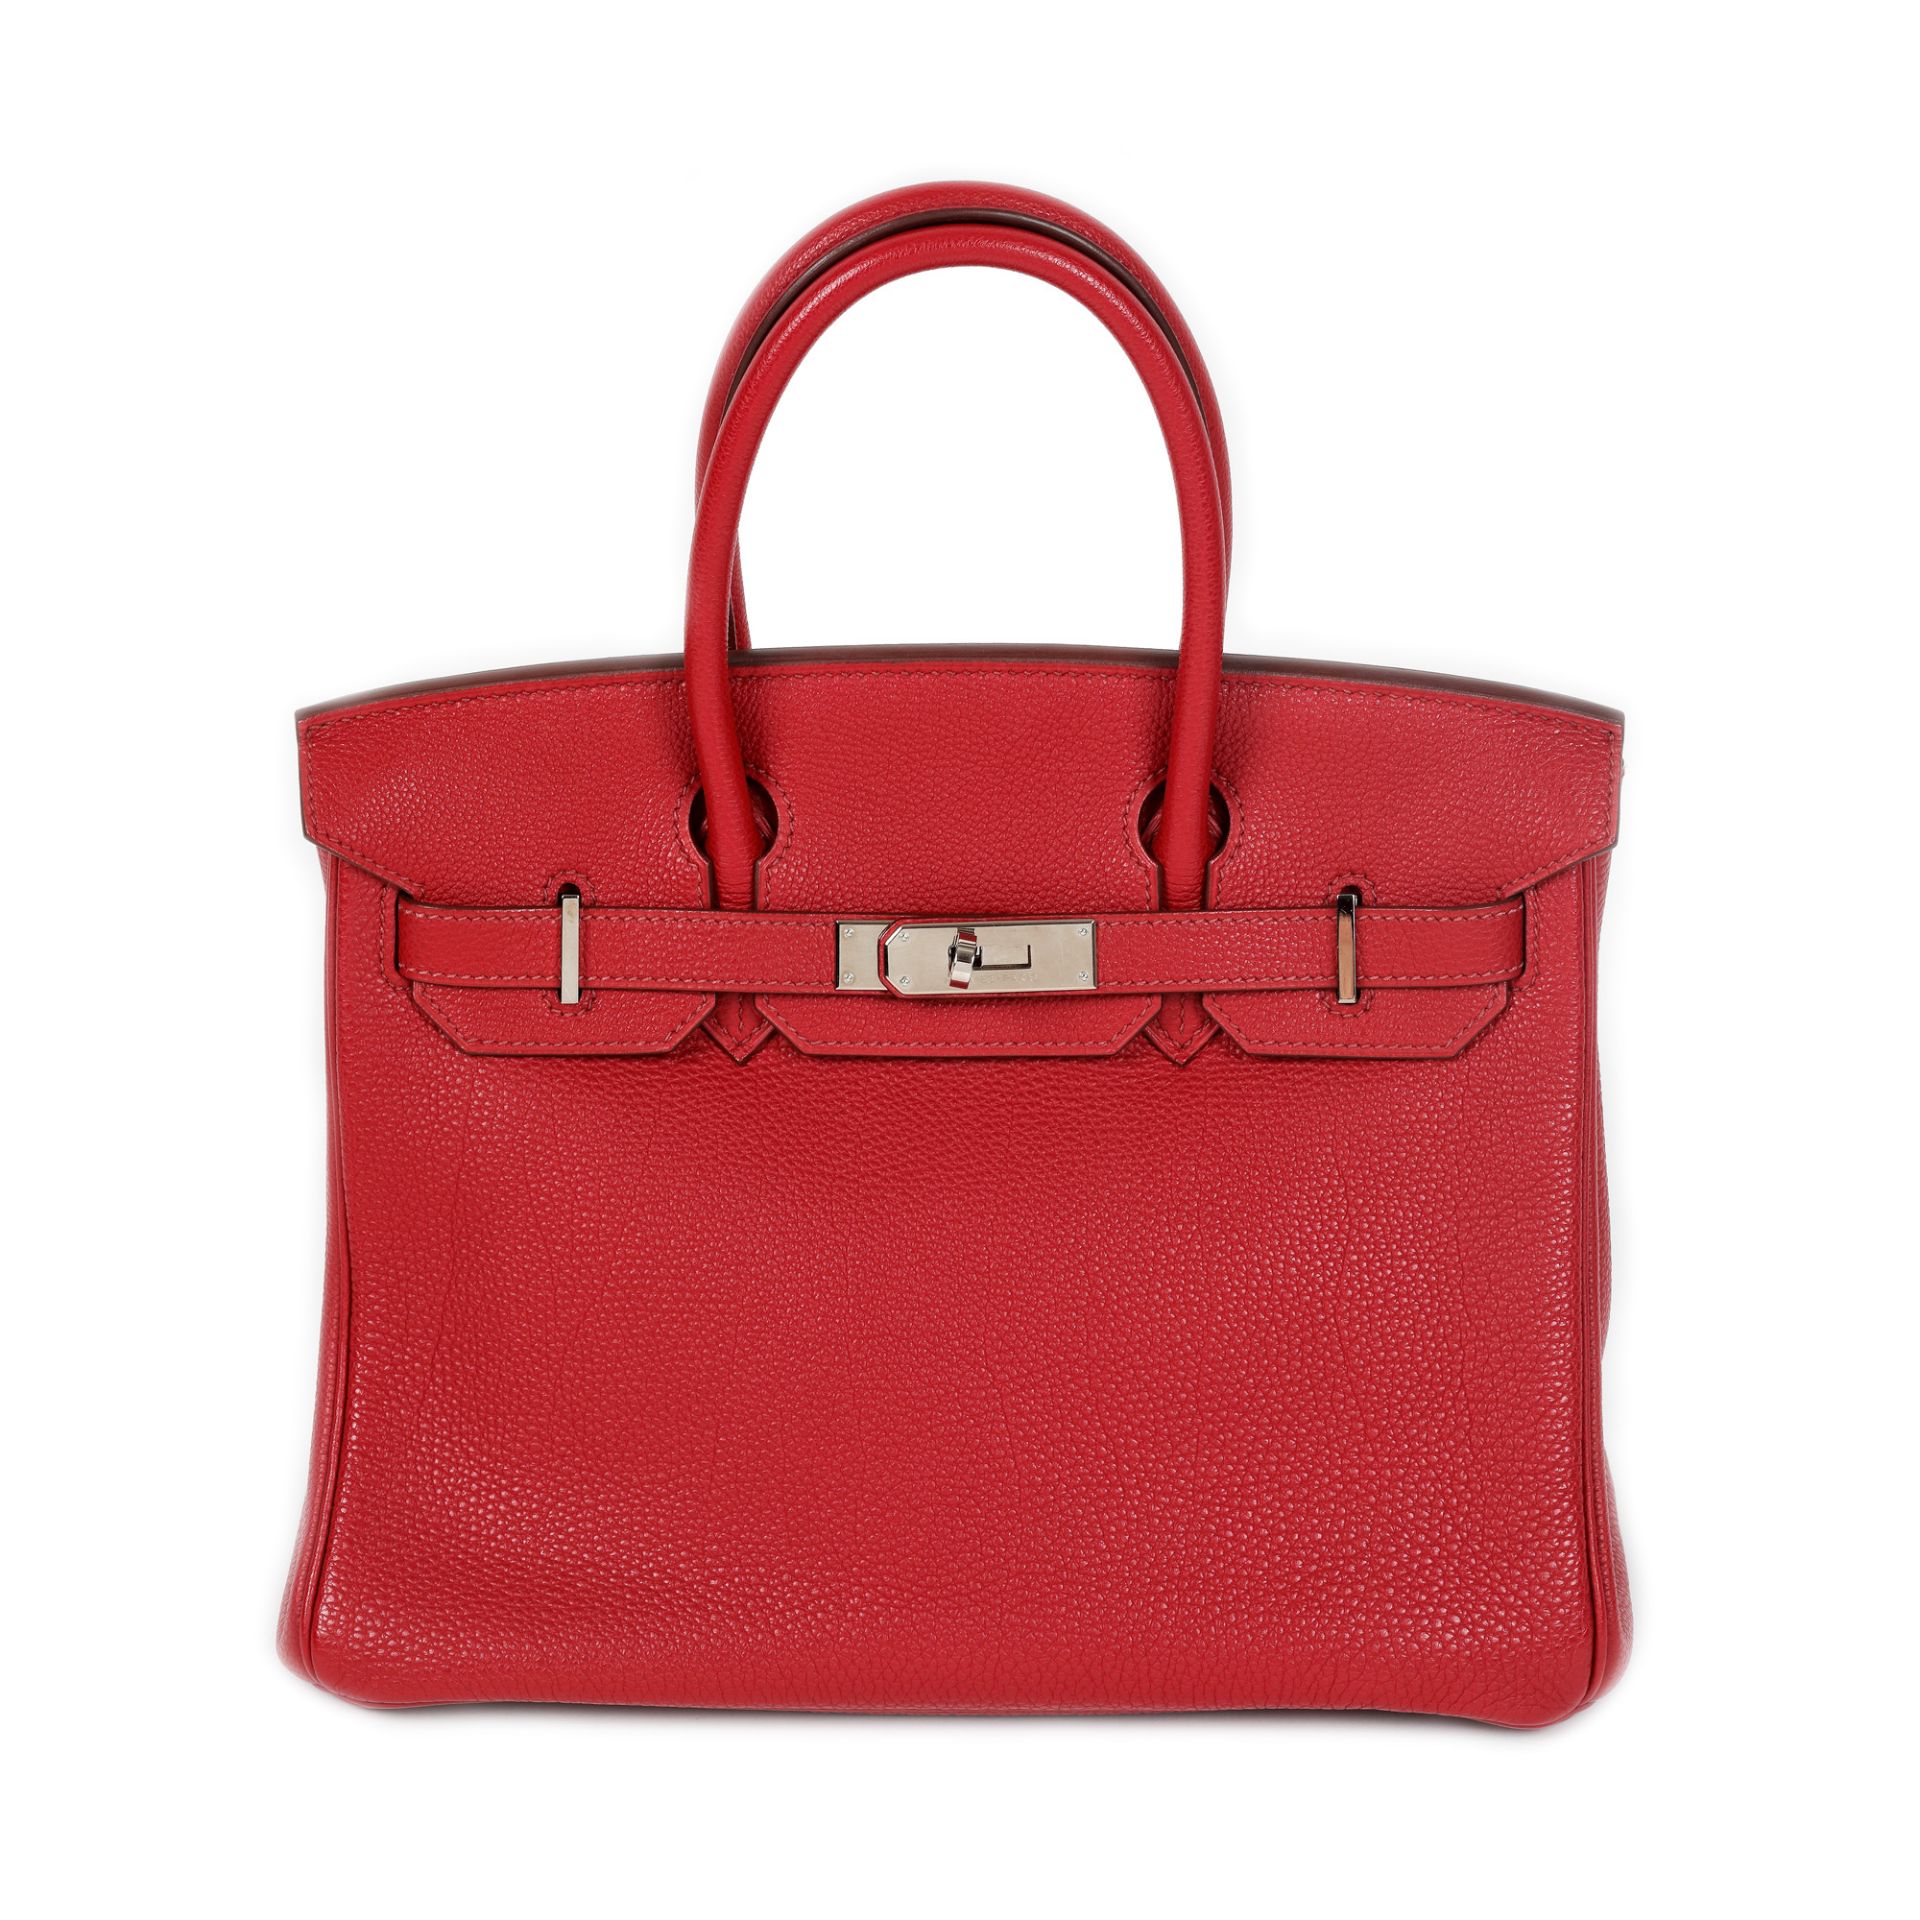 "Birkin 40" - Hermès bag, Togo leather, Rouge Casaque colour